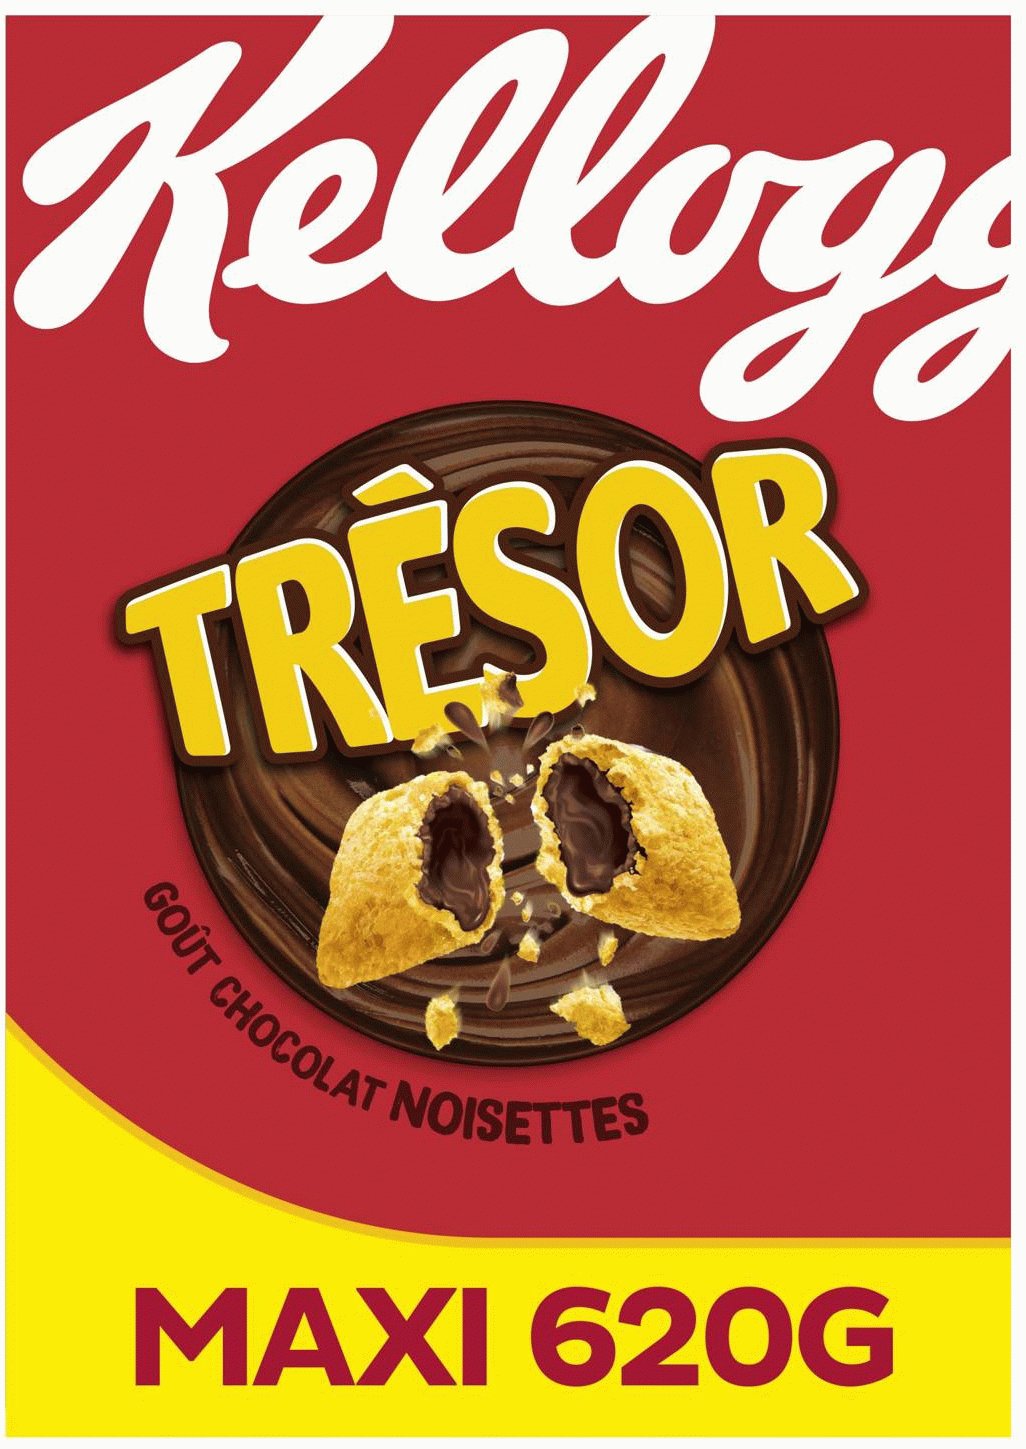 Kellogg's Mmh... Tresor Choco Nut